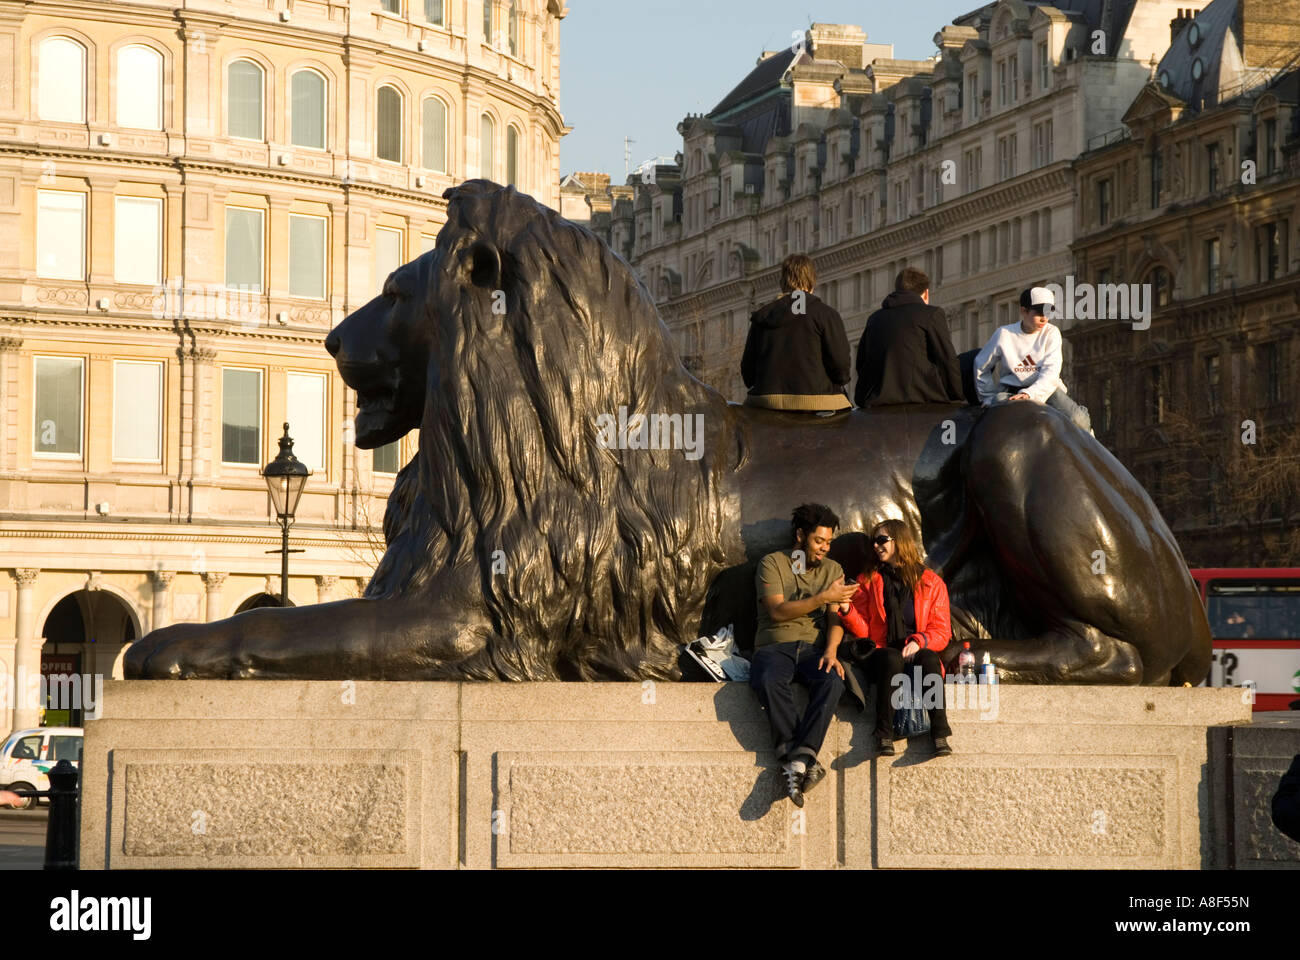 Lion sculpture by Sir Edwin Landseer in Trafalgar Square London England UK Stock Photo